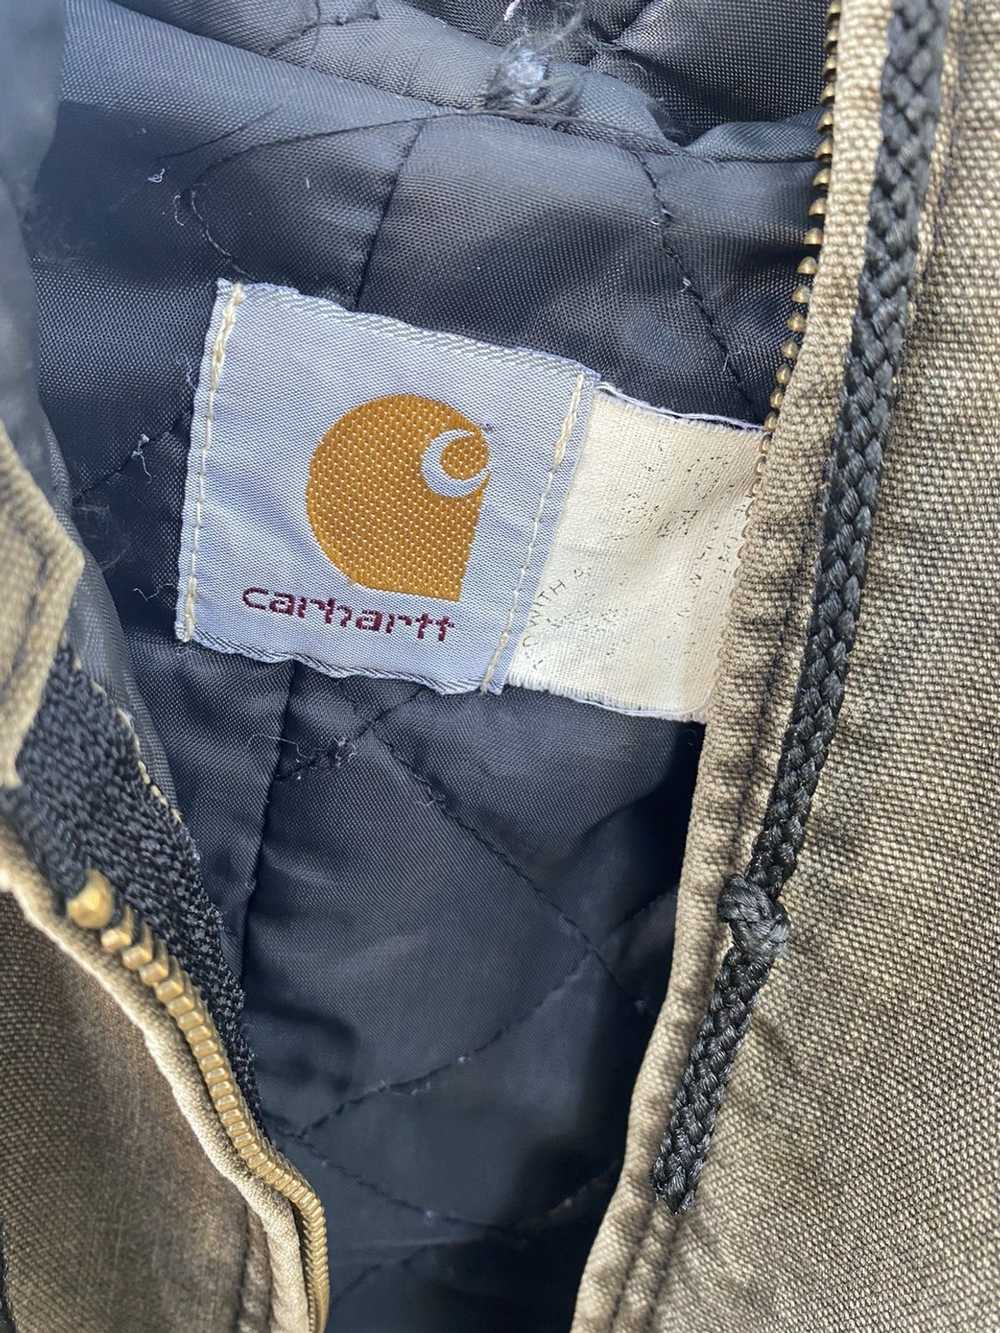 Carhartt Vintage Carhartt jacket - image 3